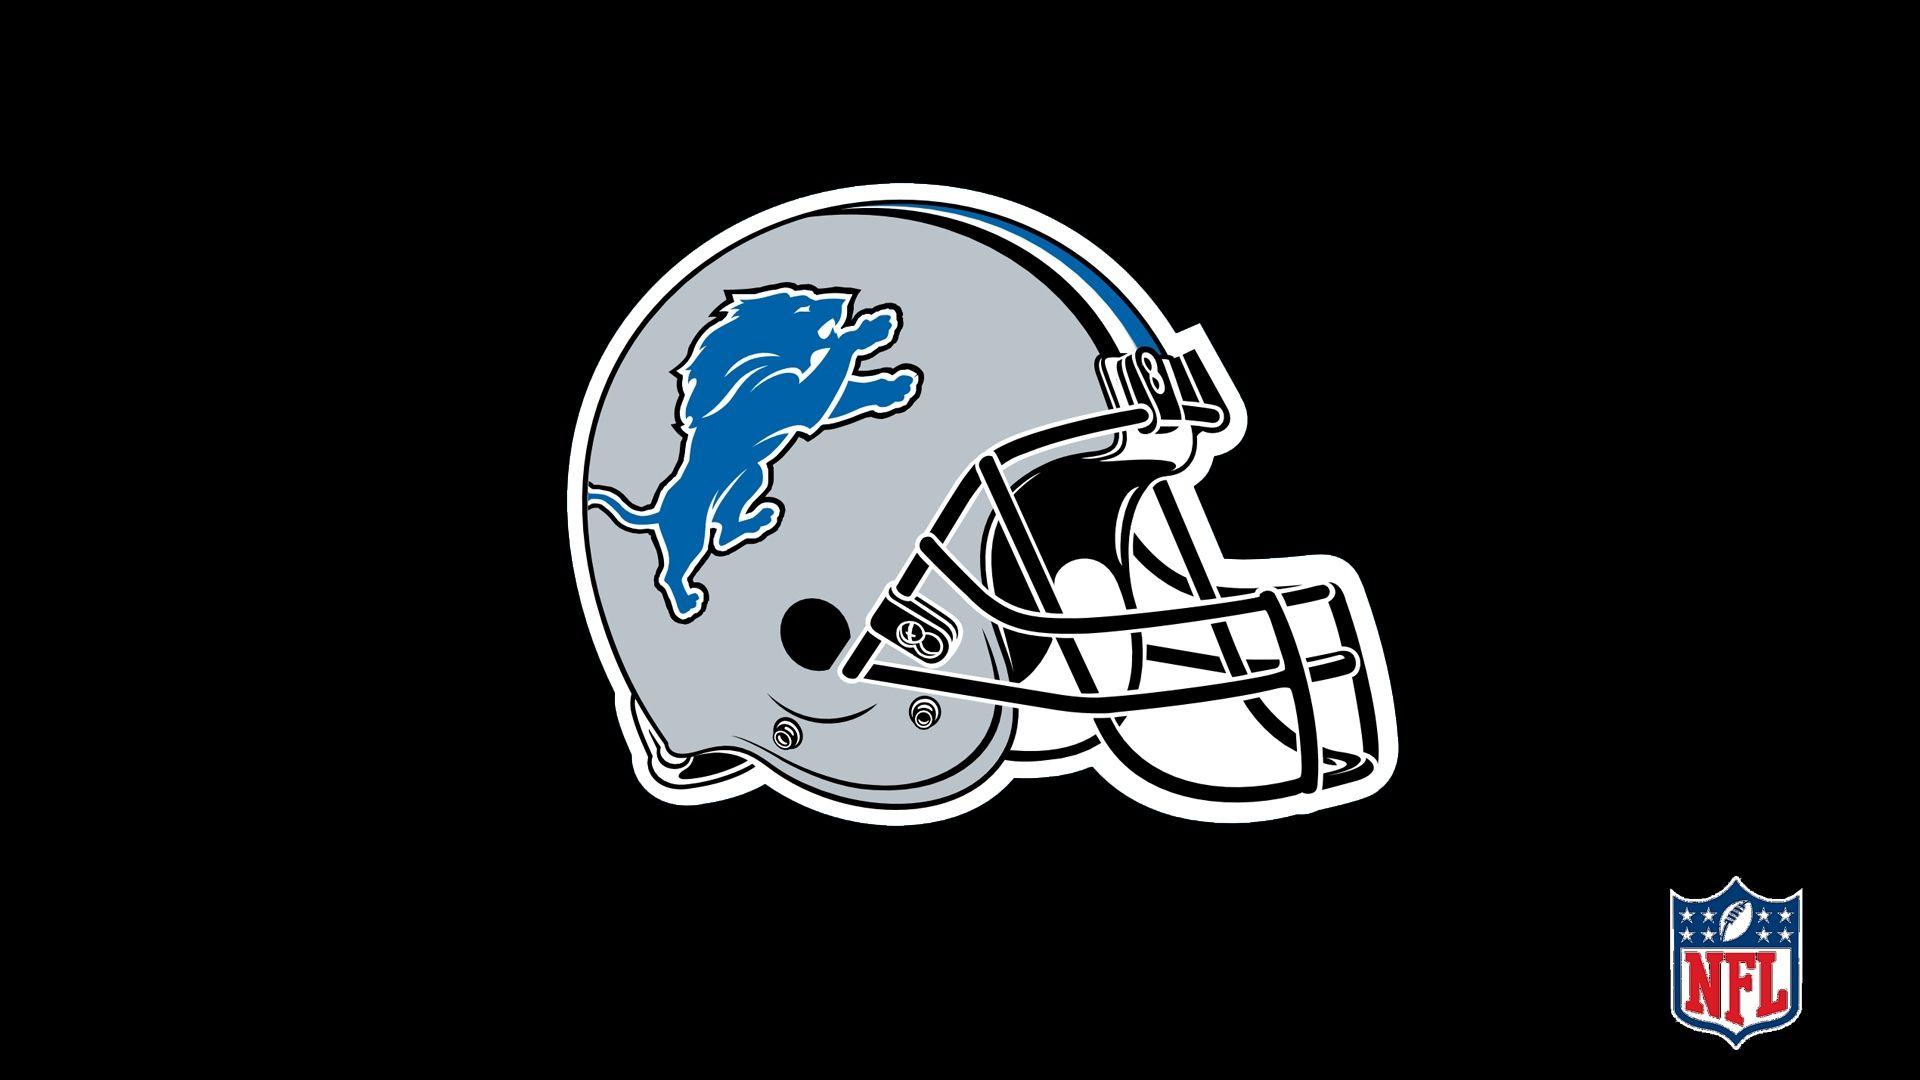 NFL Detroit Lions Helmet wallpaper 2018 in Football